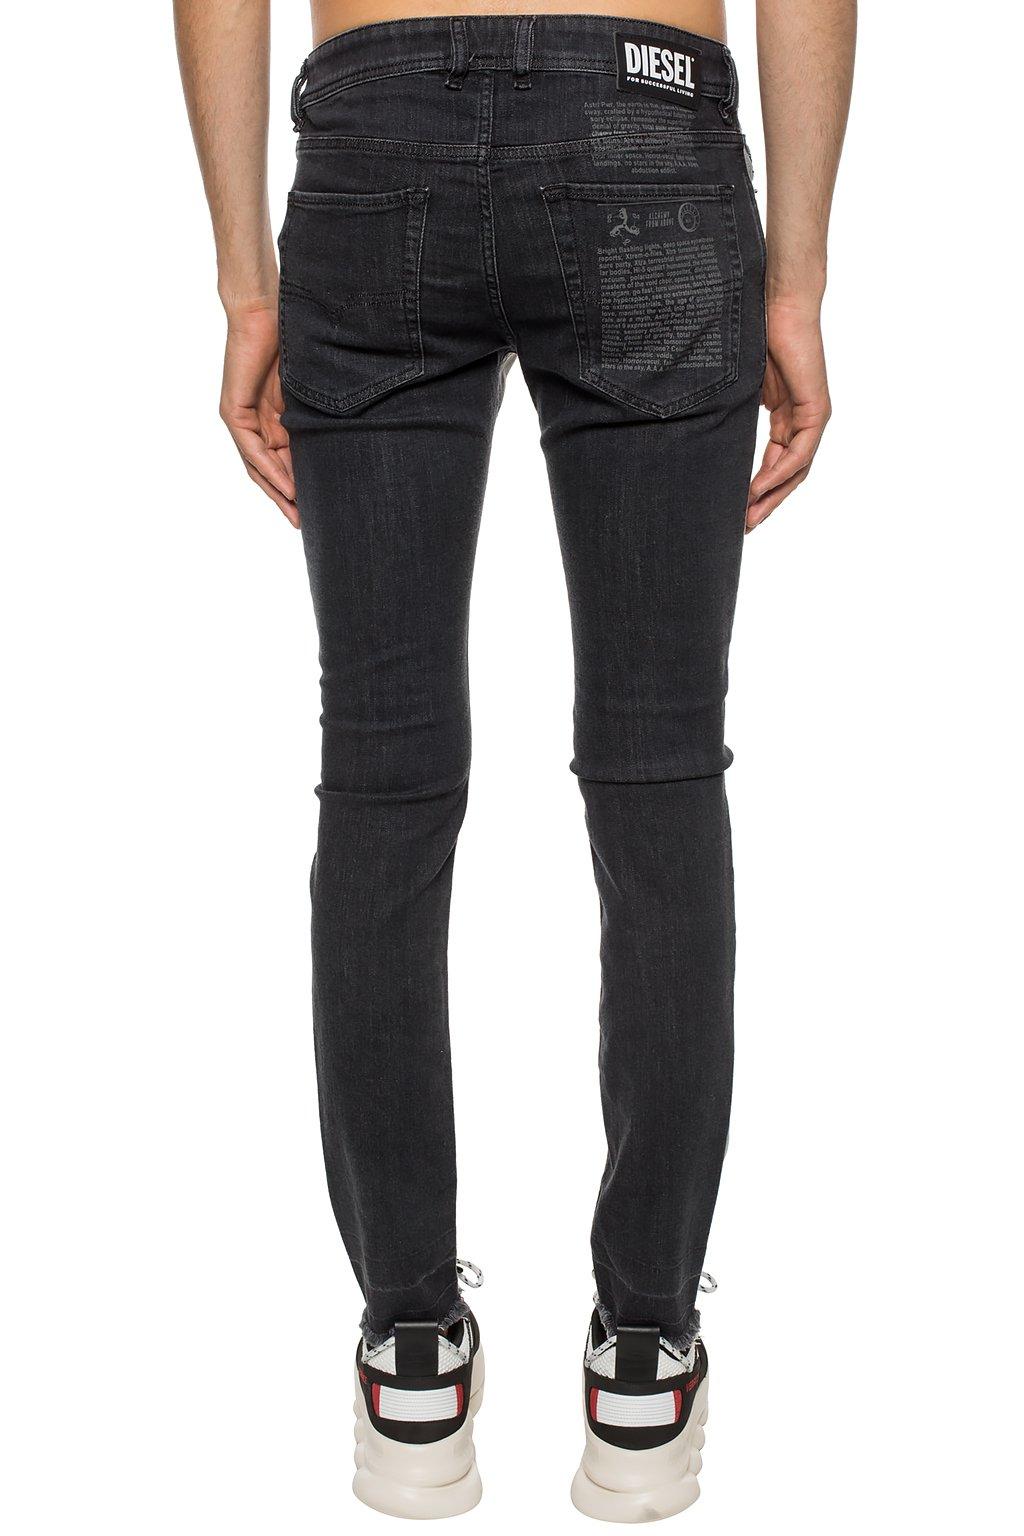 DIESEL Denim 'sleenker-x-sp' Skinny Jeans in Grey (Gray) for Men - Lyst